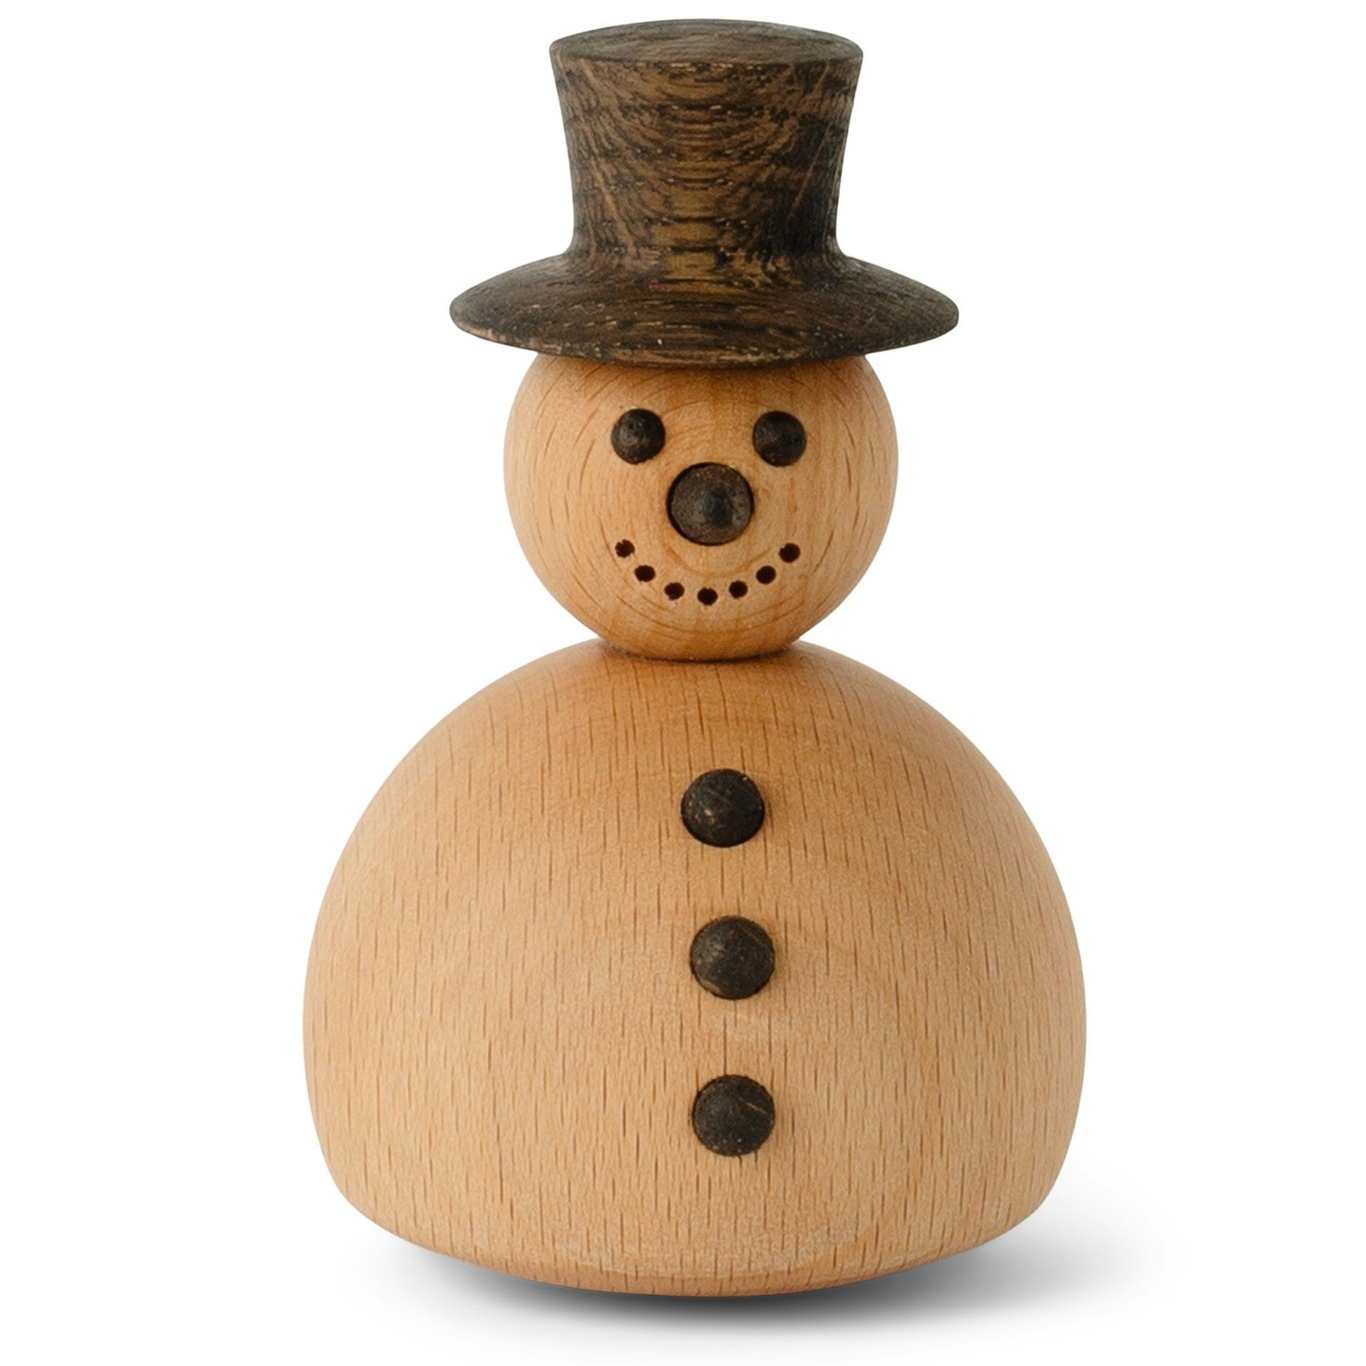 The Snowman Houten Beeldje 9.4 cm